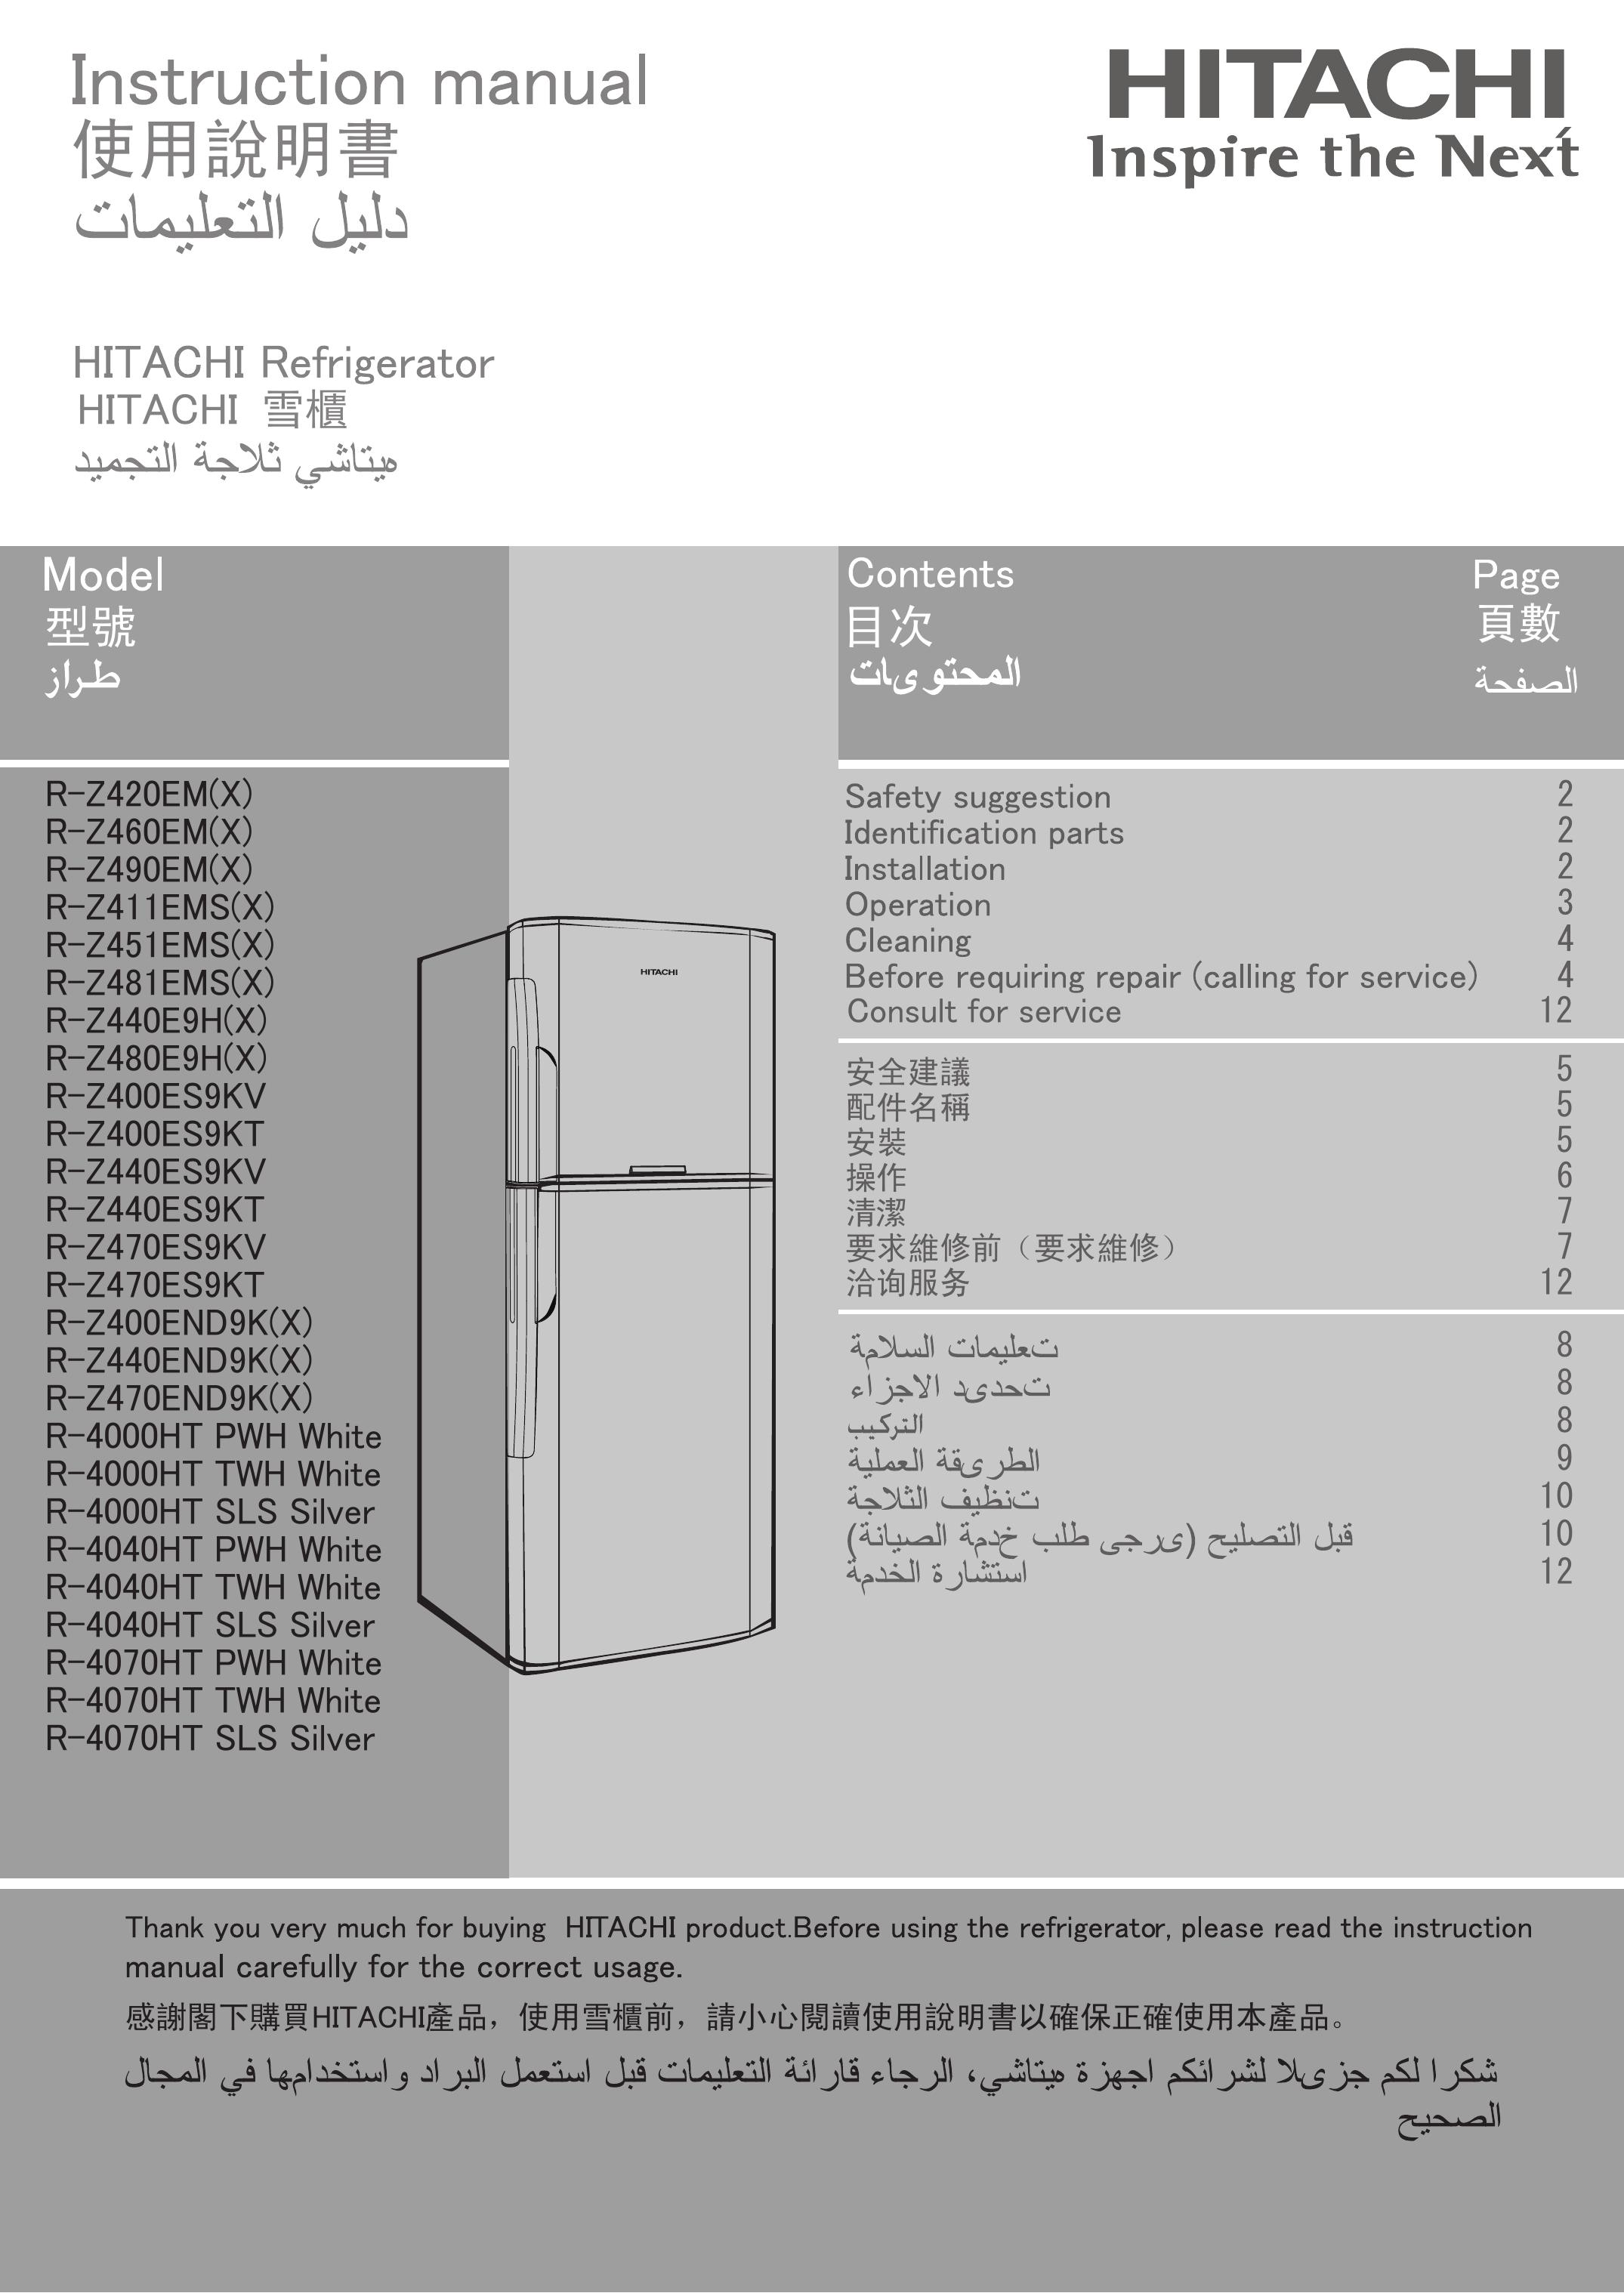 Hitachi R-4040HT PWH White Refrigerator User Manual